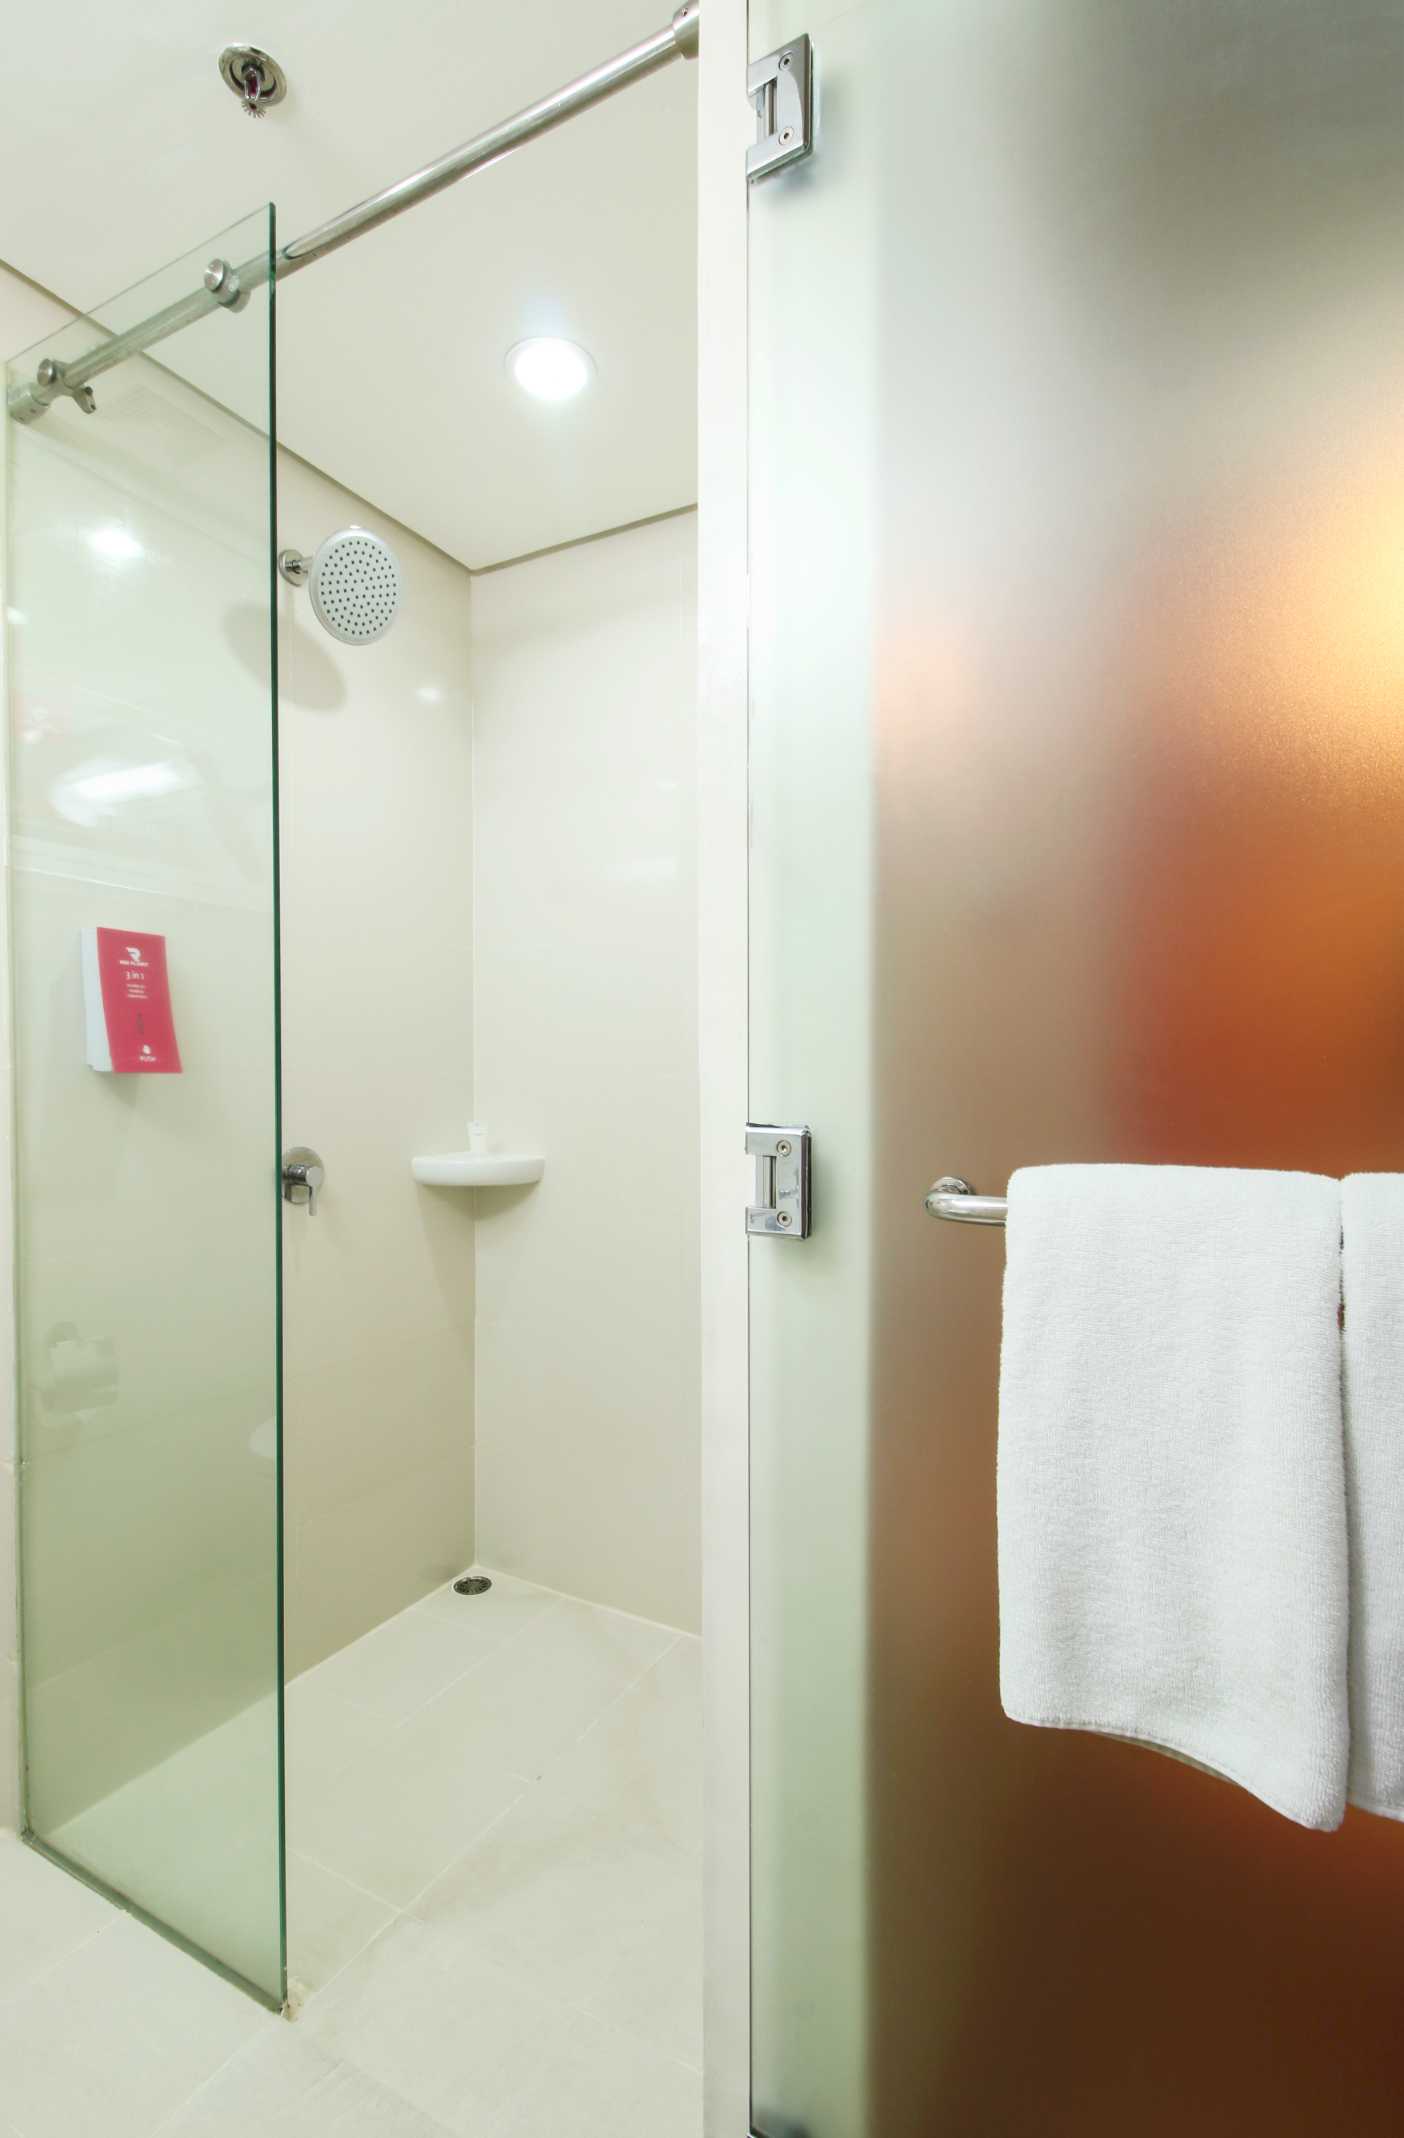 bathroom 1 - hotel red planet angeles city - angeles city, philippines